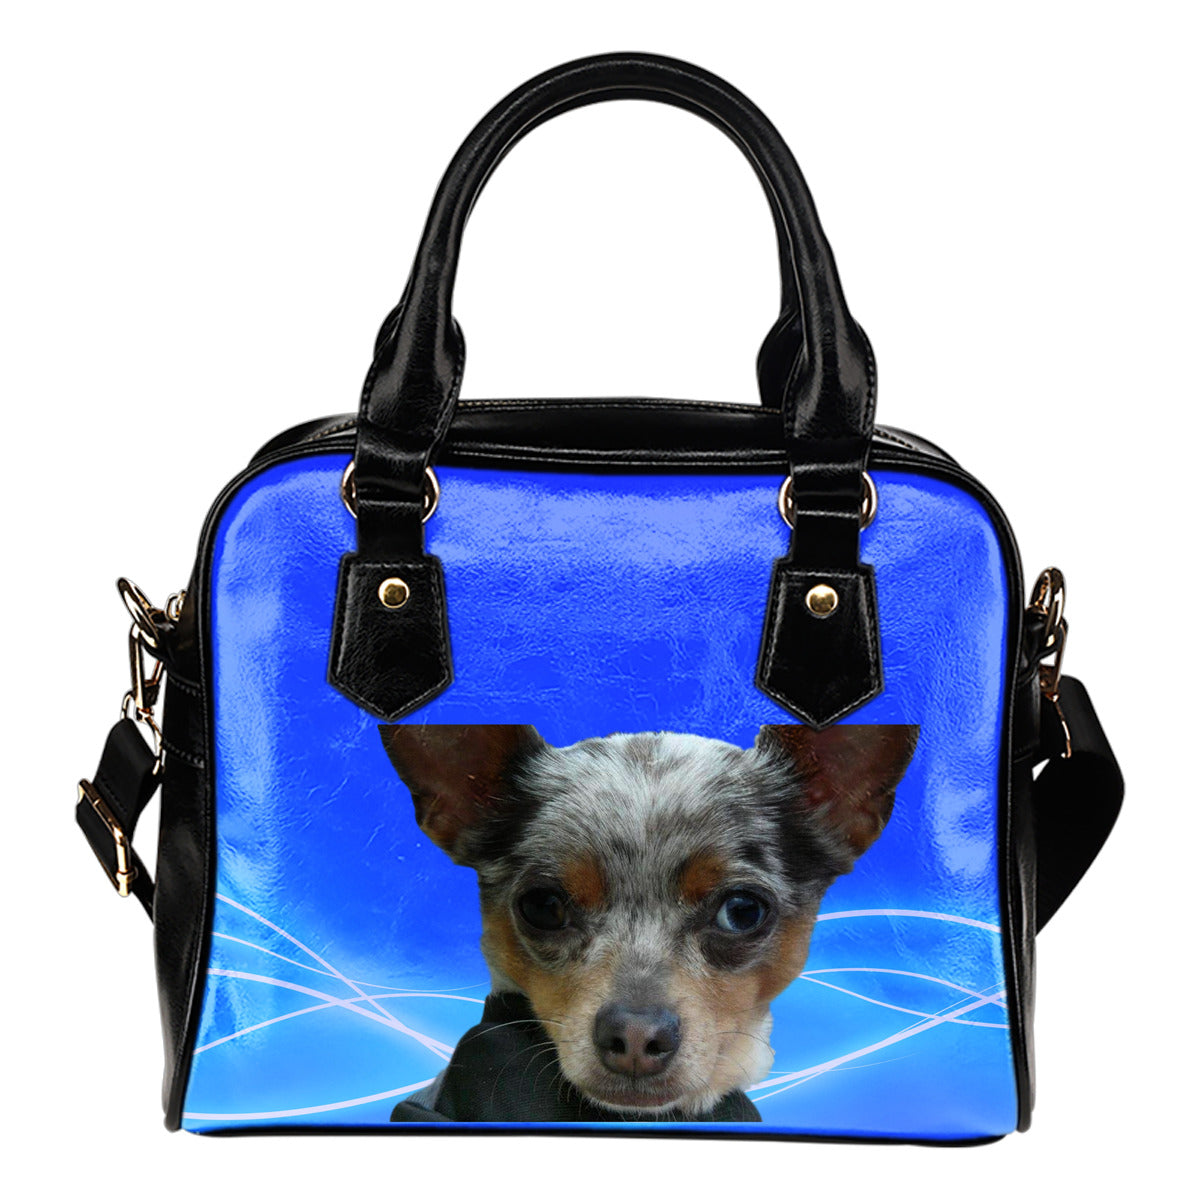 Chihuahua Shoulder Bag - Blue Merle